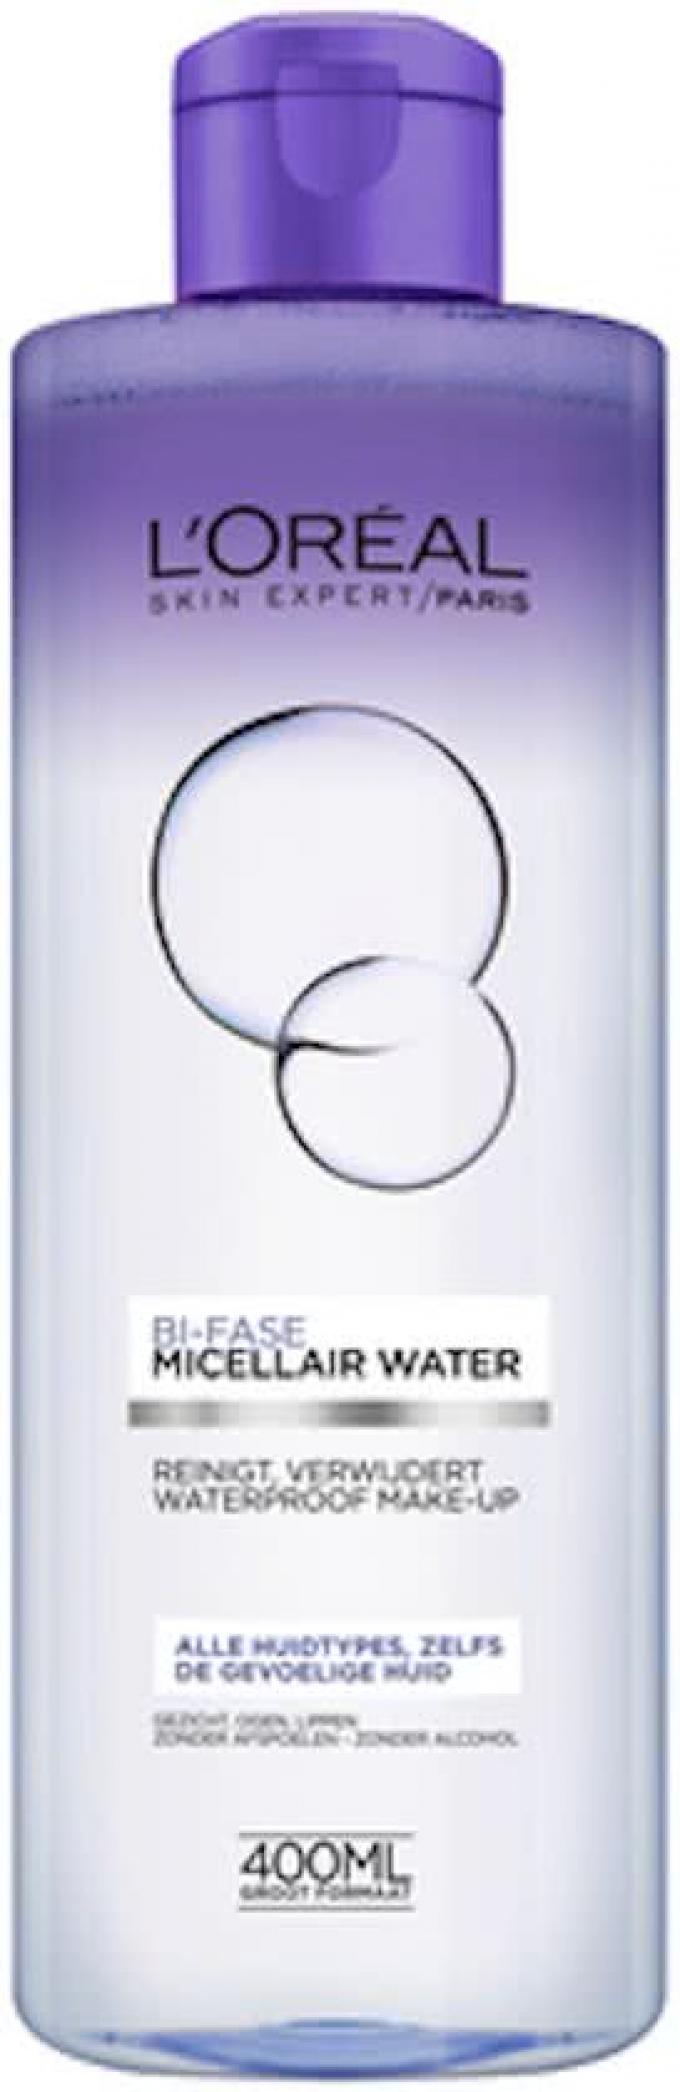 Micellair Water - L'Oréal